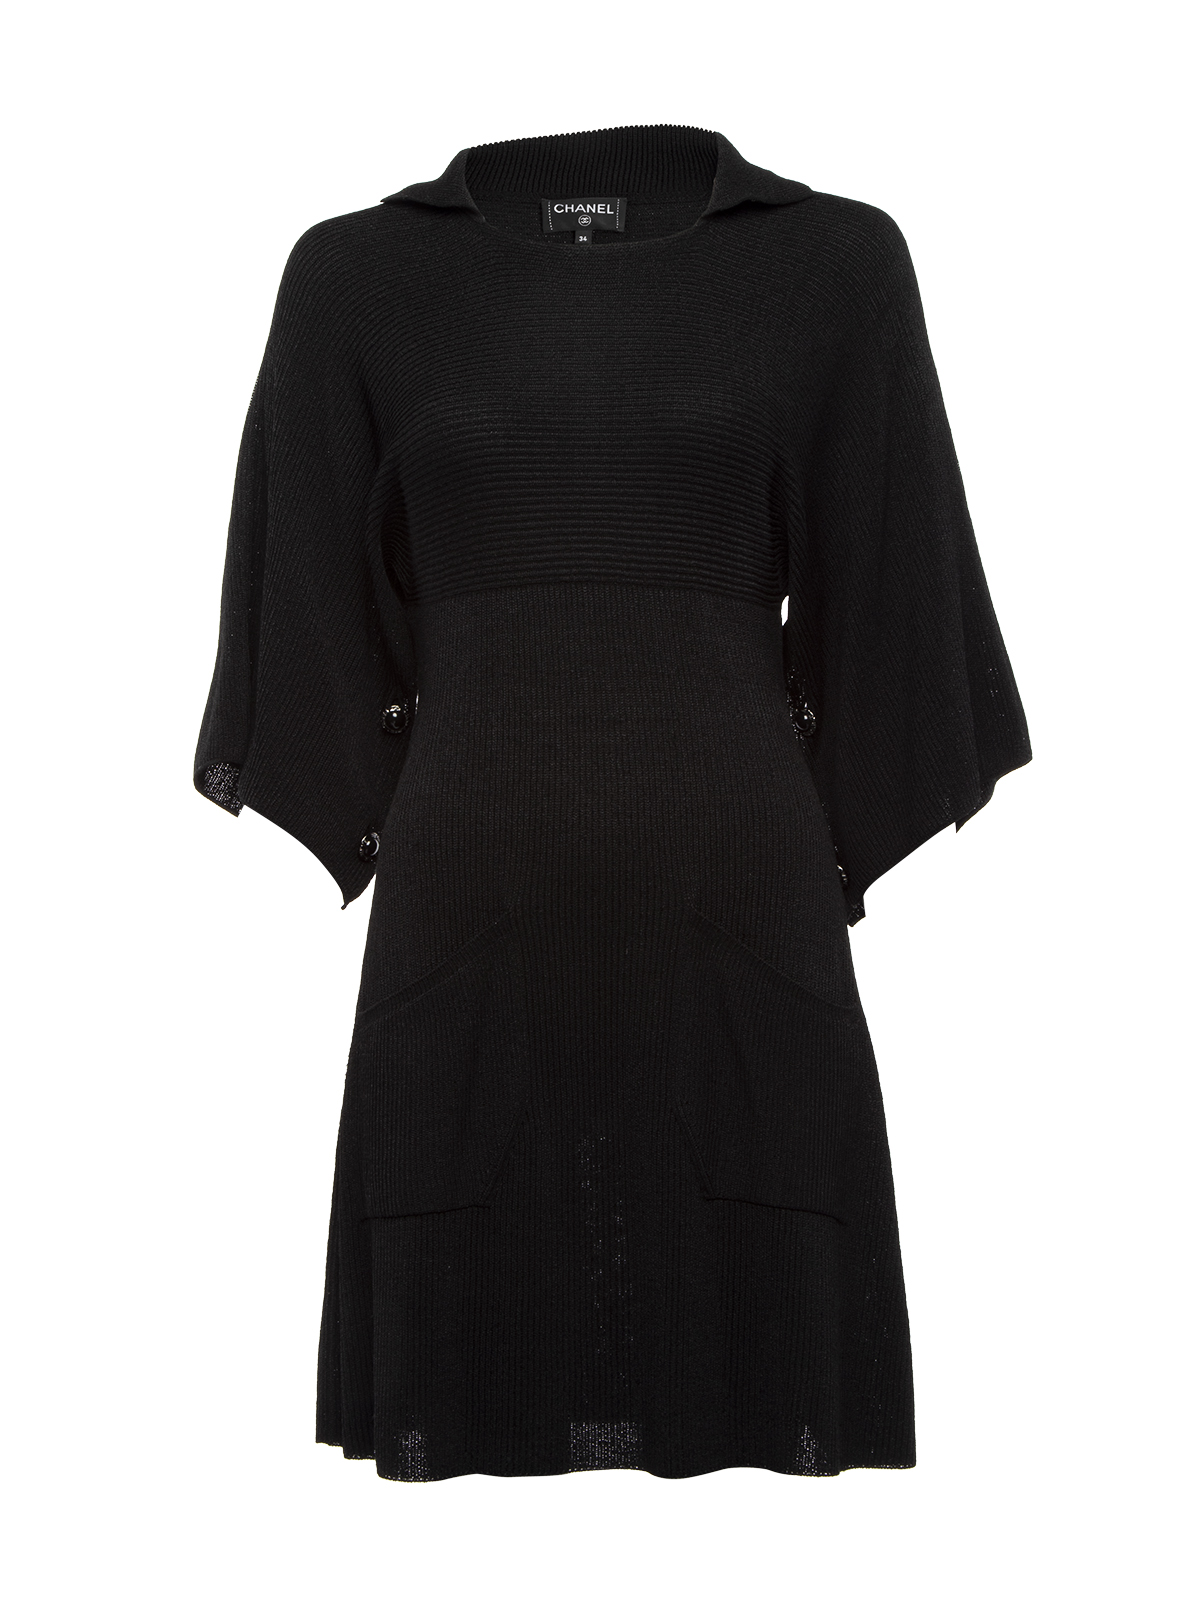 Chanel, Polyester Knit Black Detail Dress